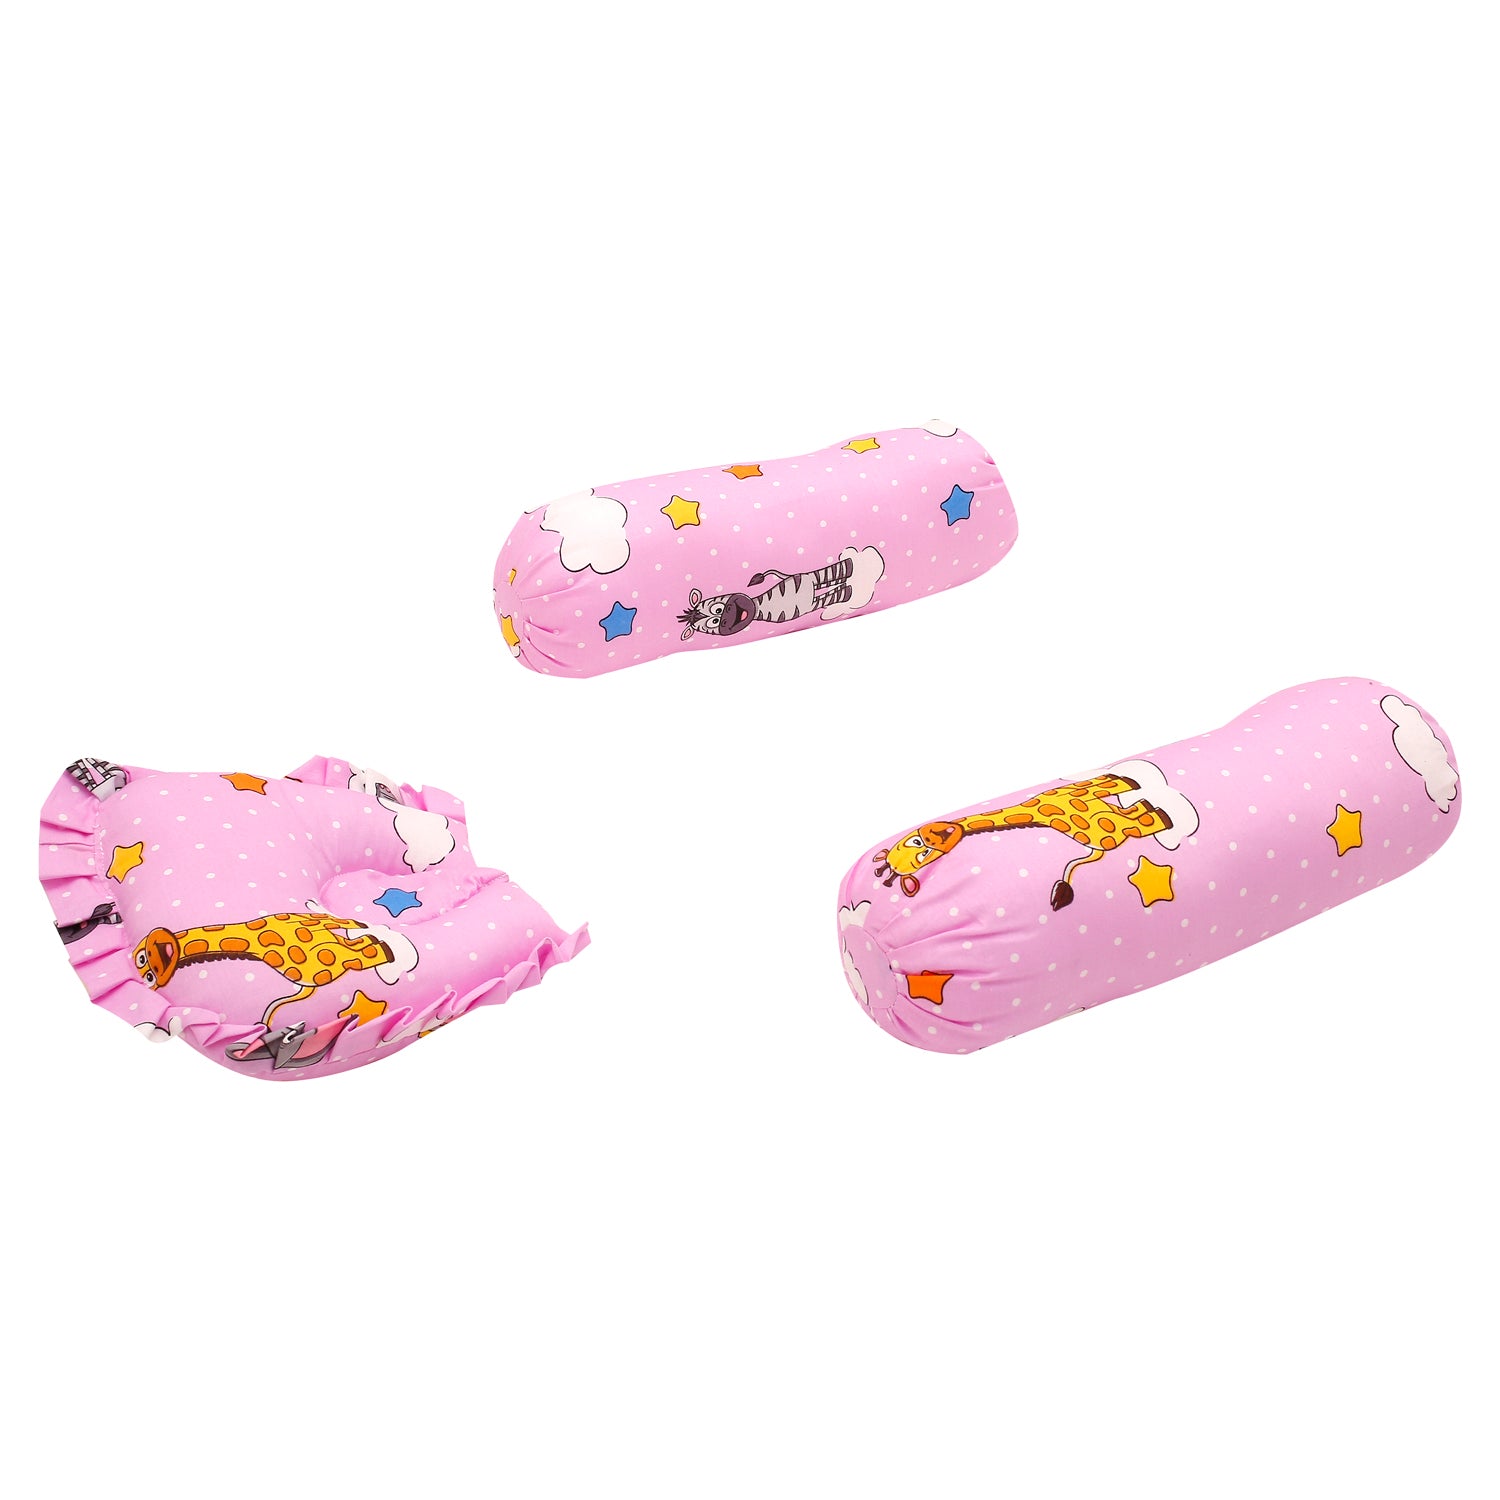 Premium Bedding Gift Set Flying Animals Pink - Baby Moo